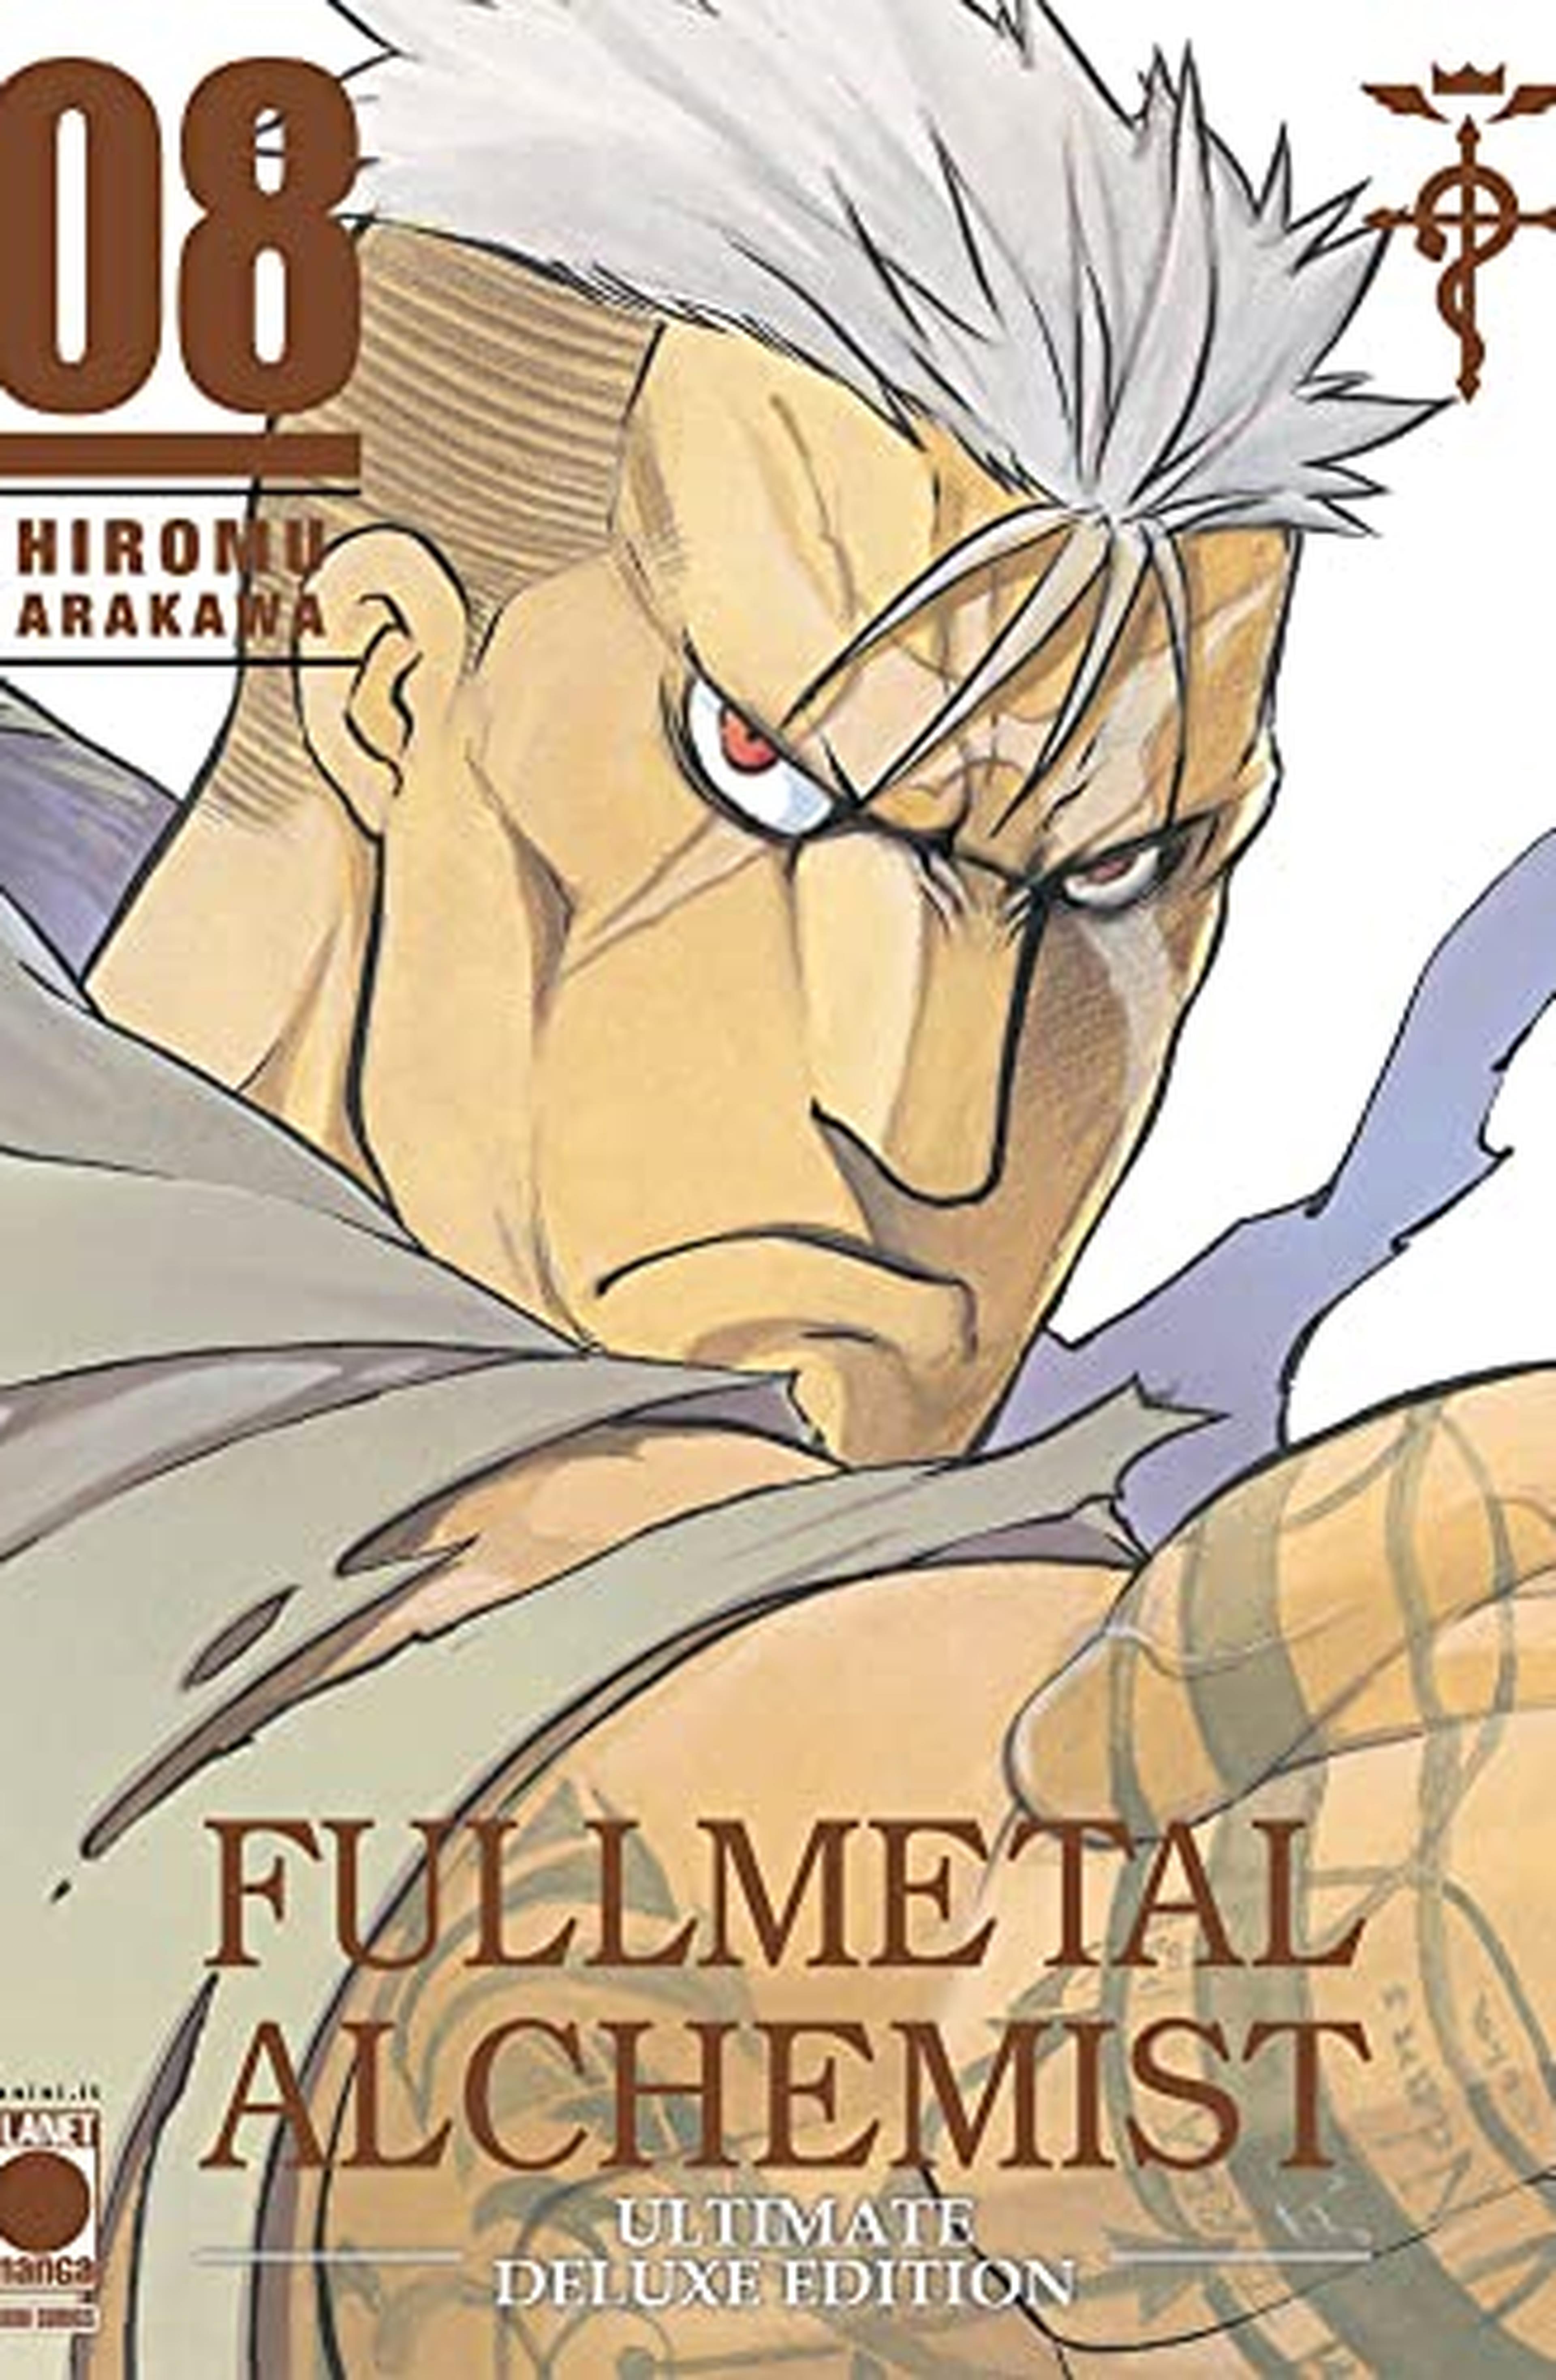 Fullmetal alchemist. Ultimate deluxe edition (Vol. 8)